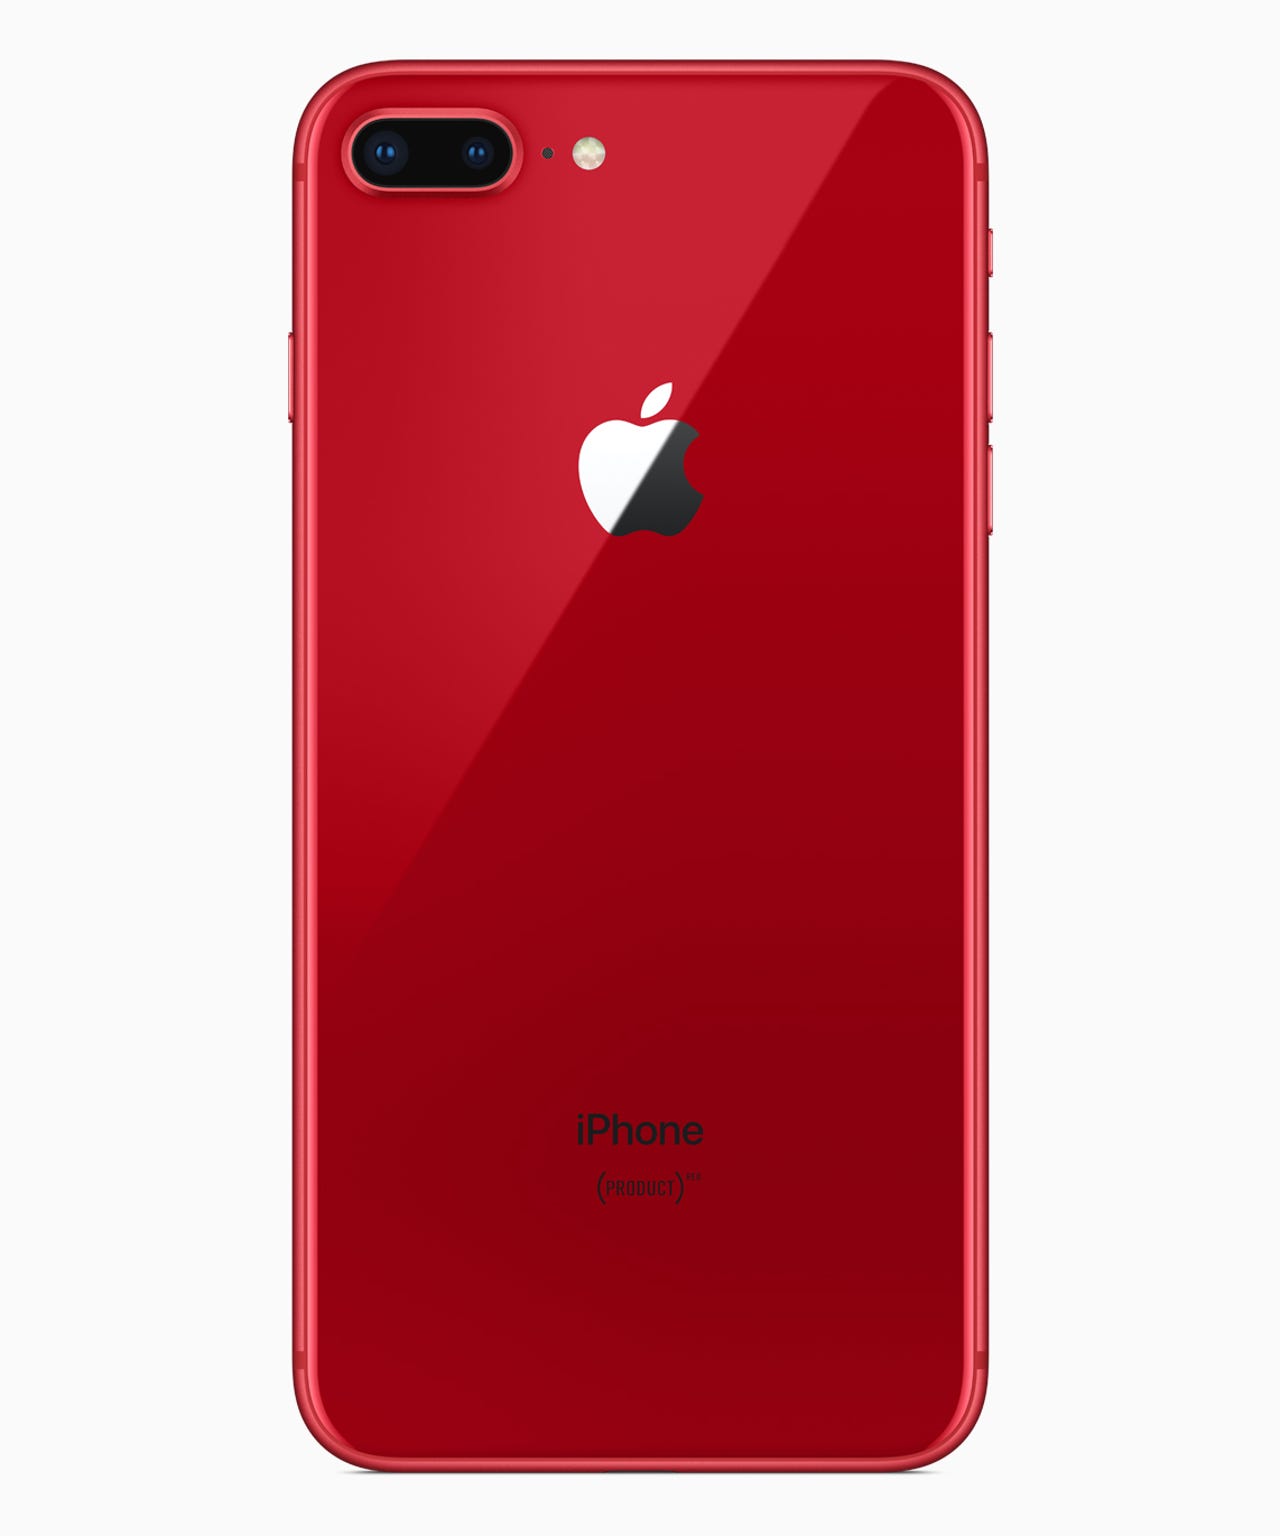 iphone8plus-product-redback041018.jpg